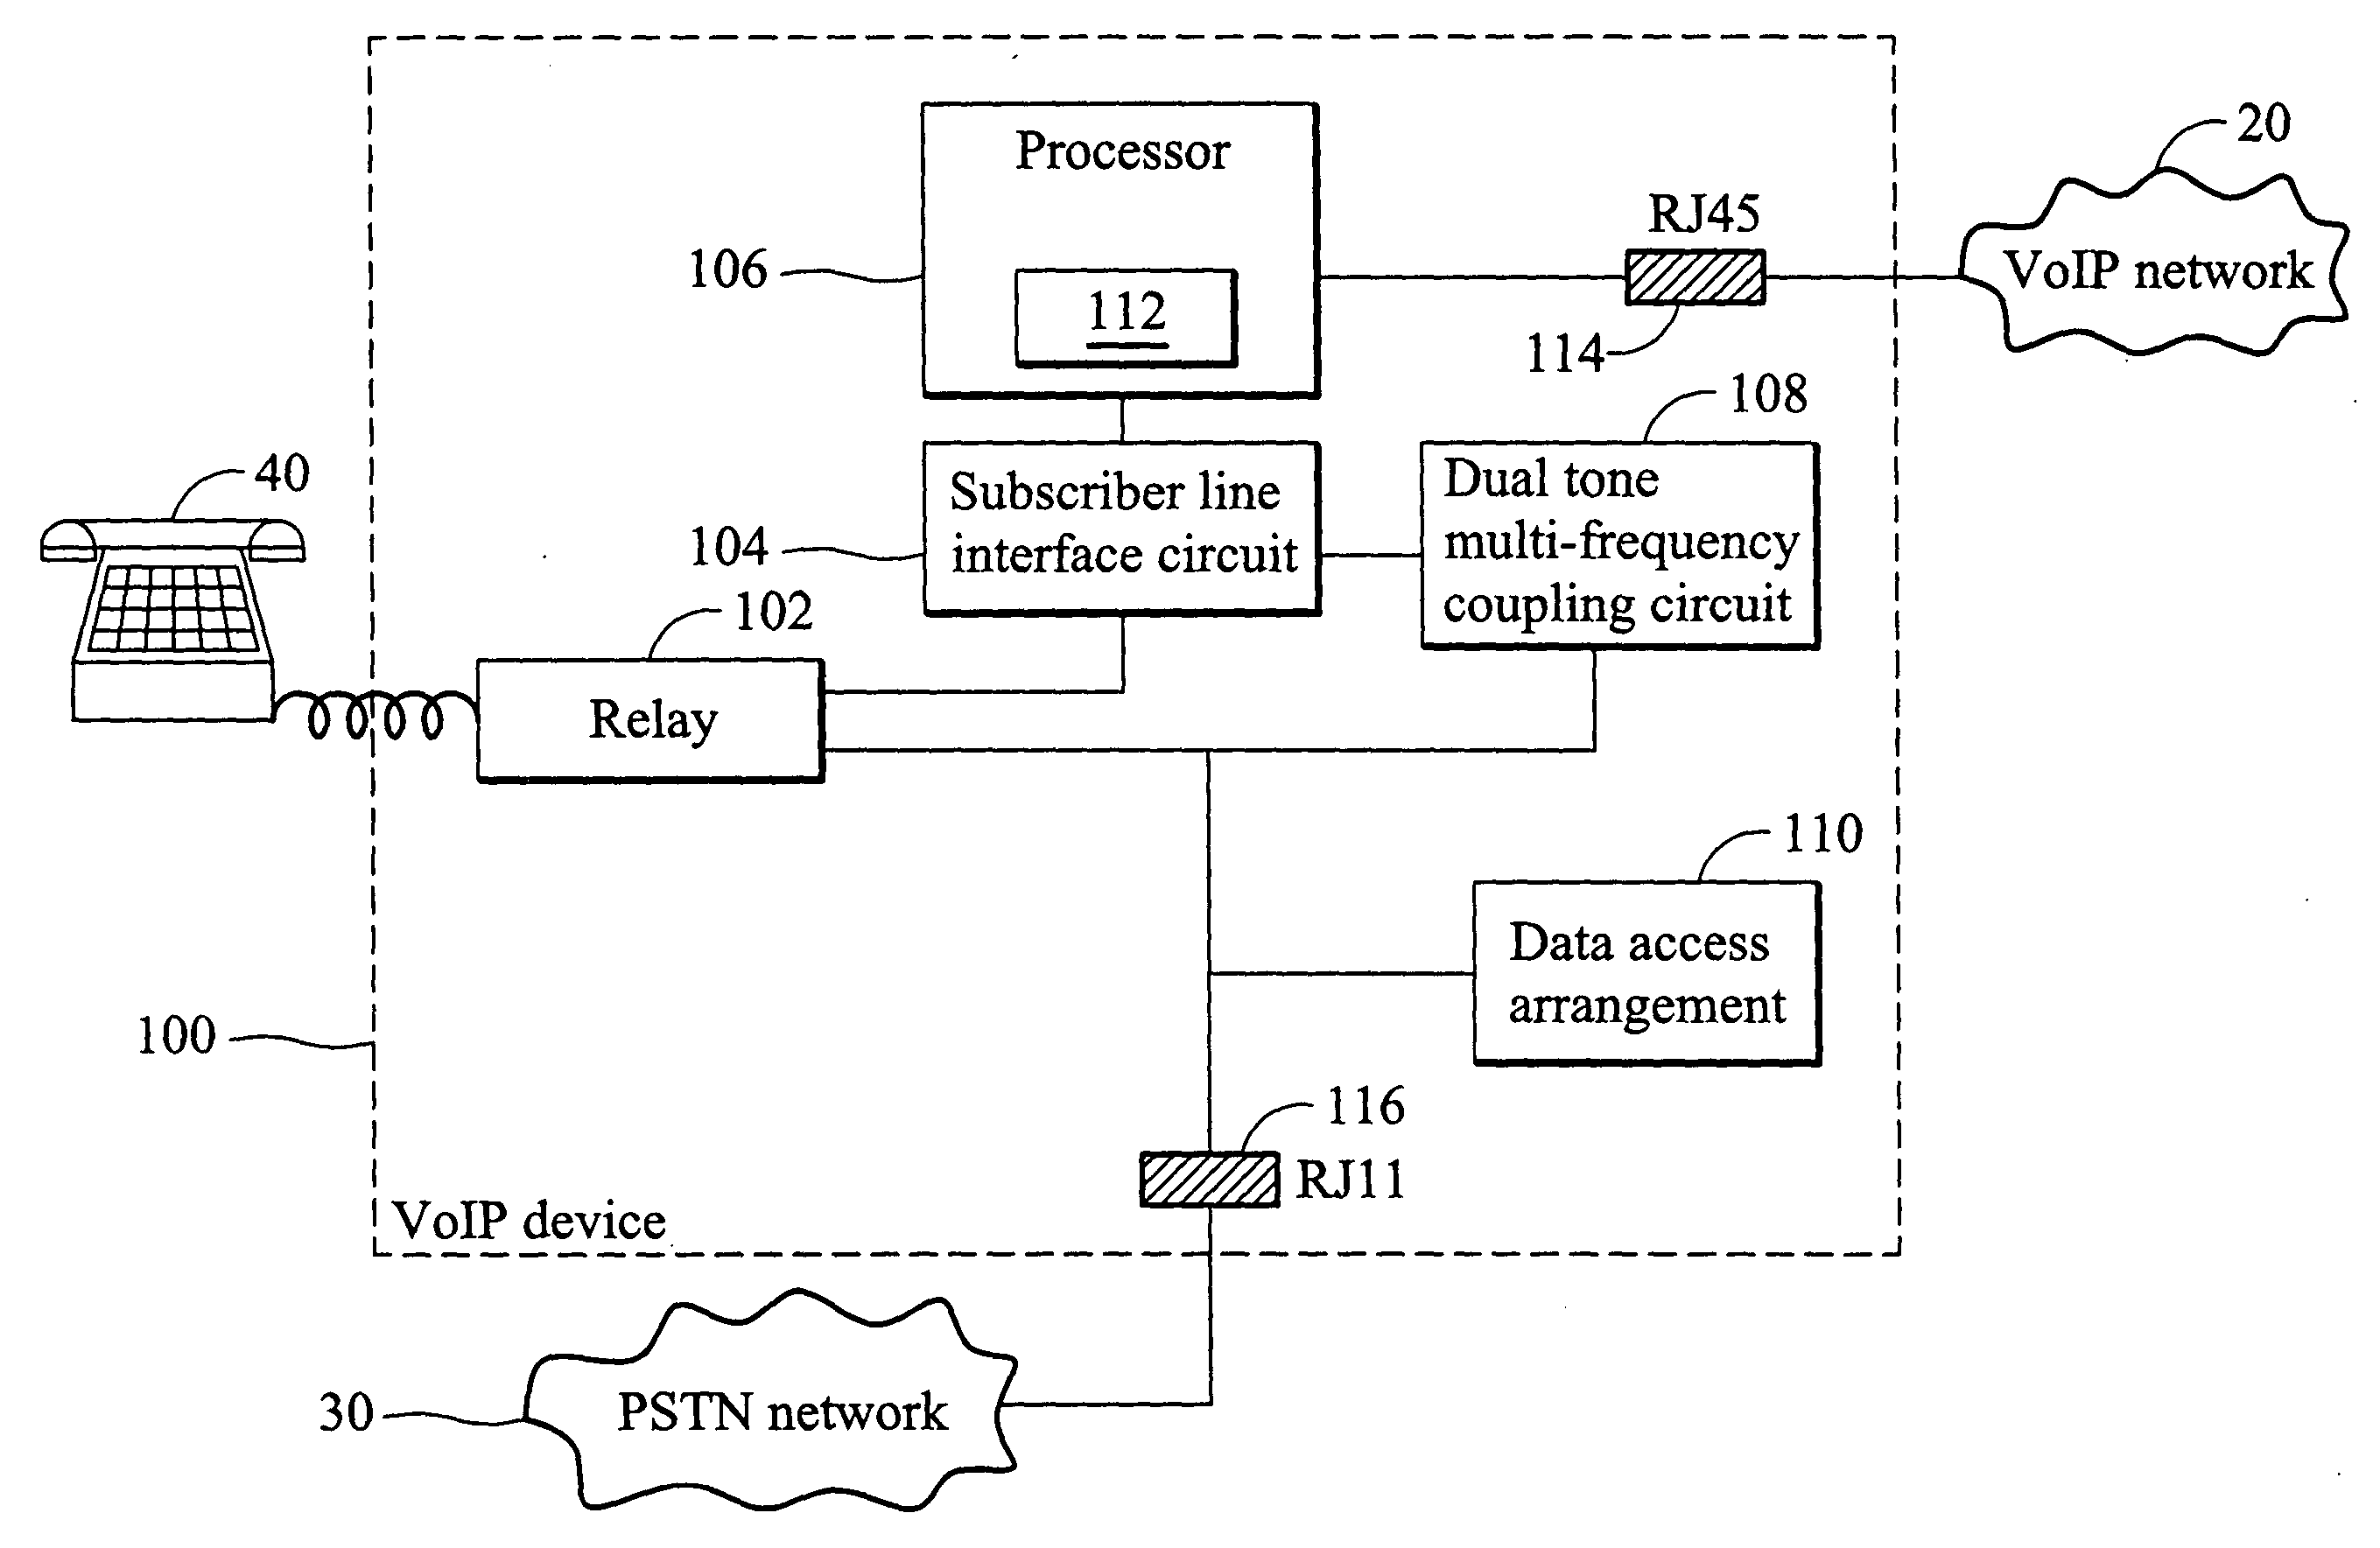 Voice-over-internet protocol device